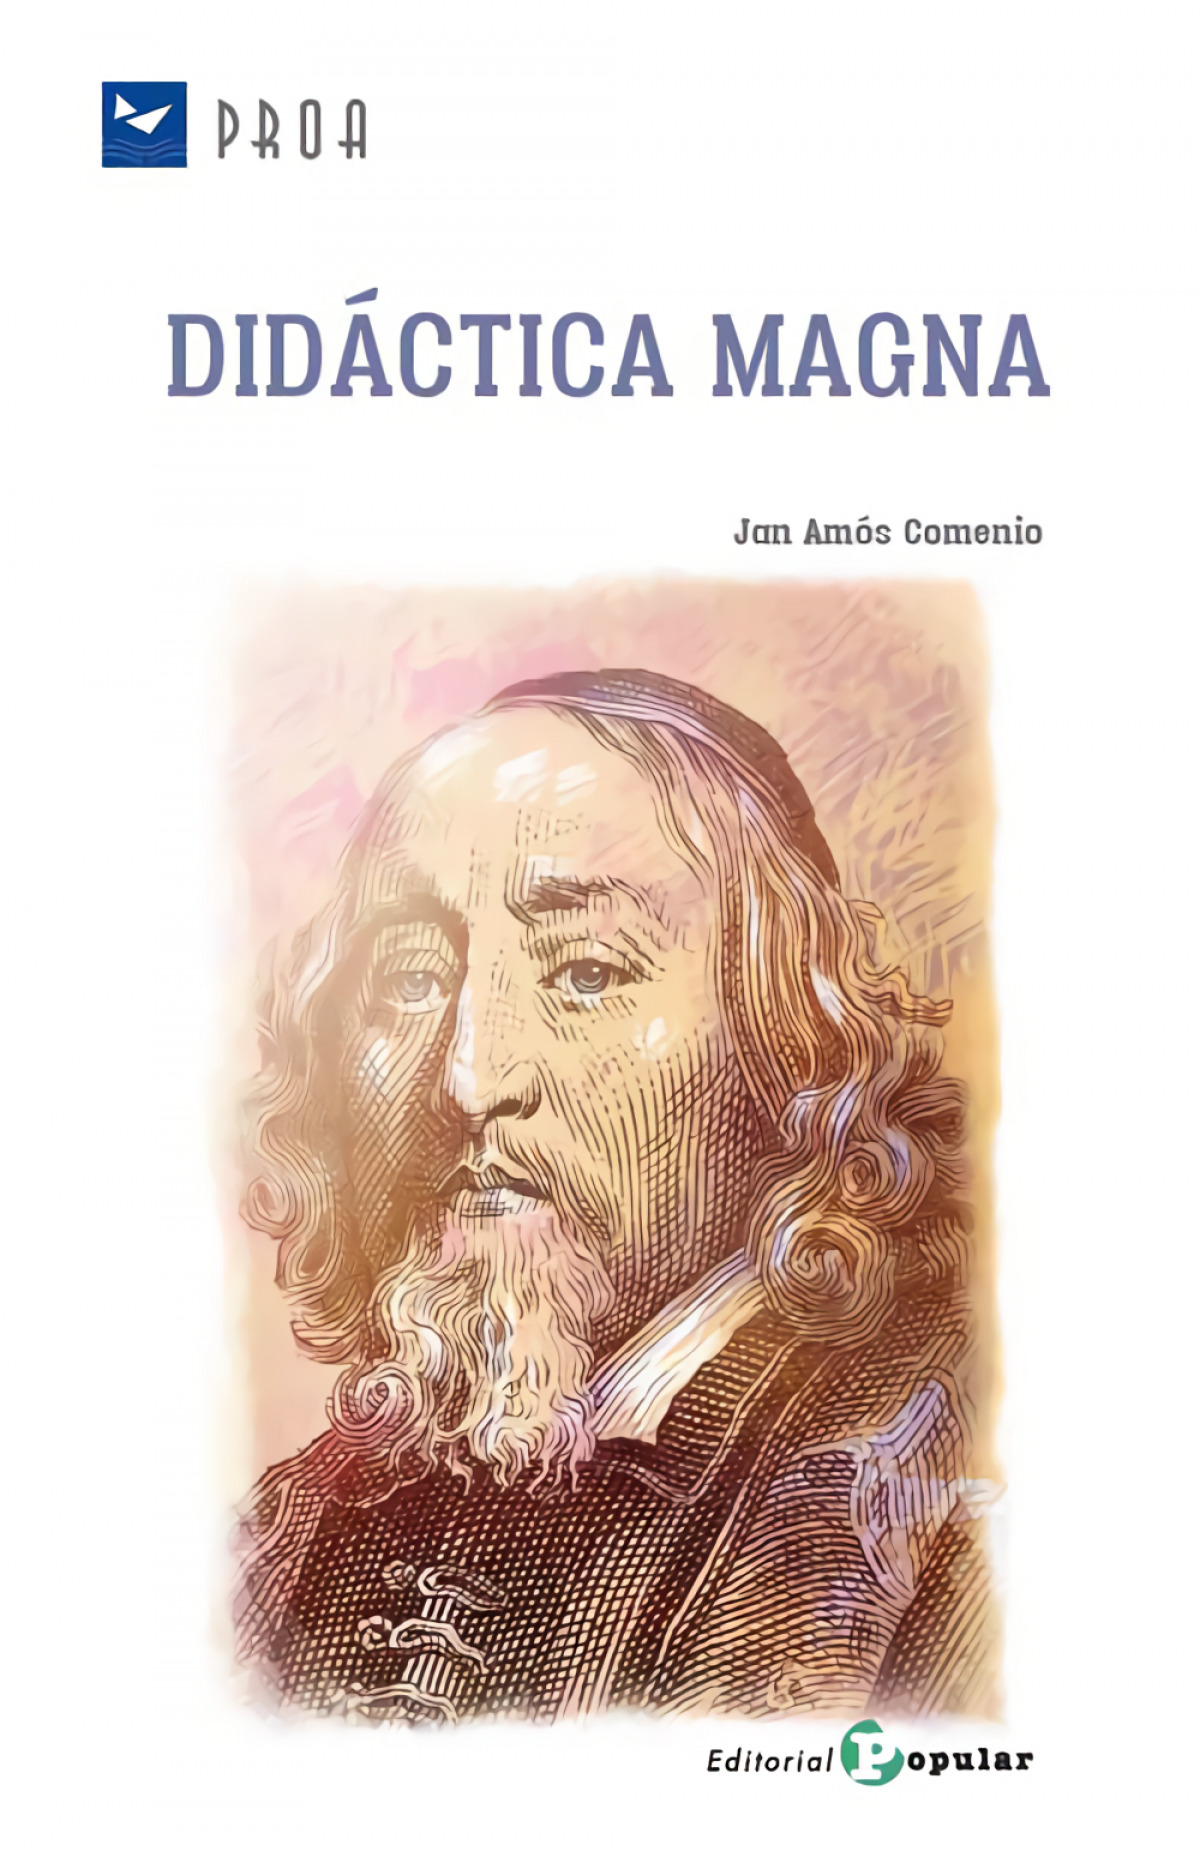 DIDACTICA MAGNA (proa, Band 51)